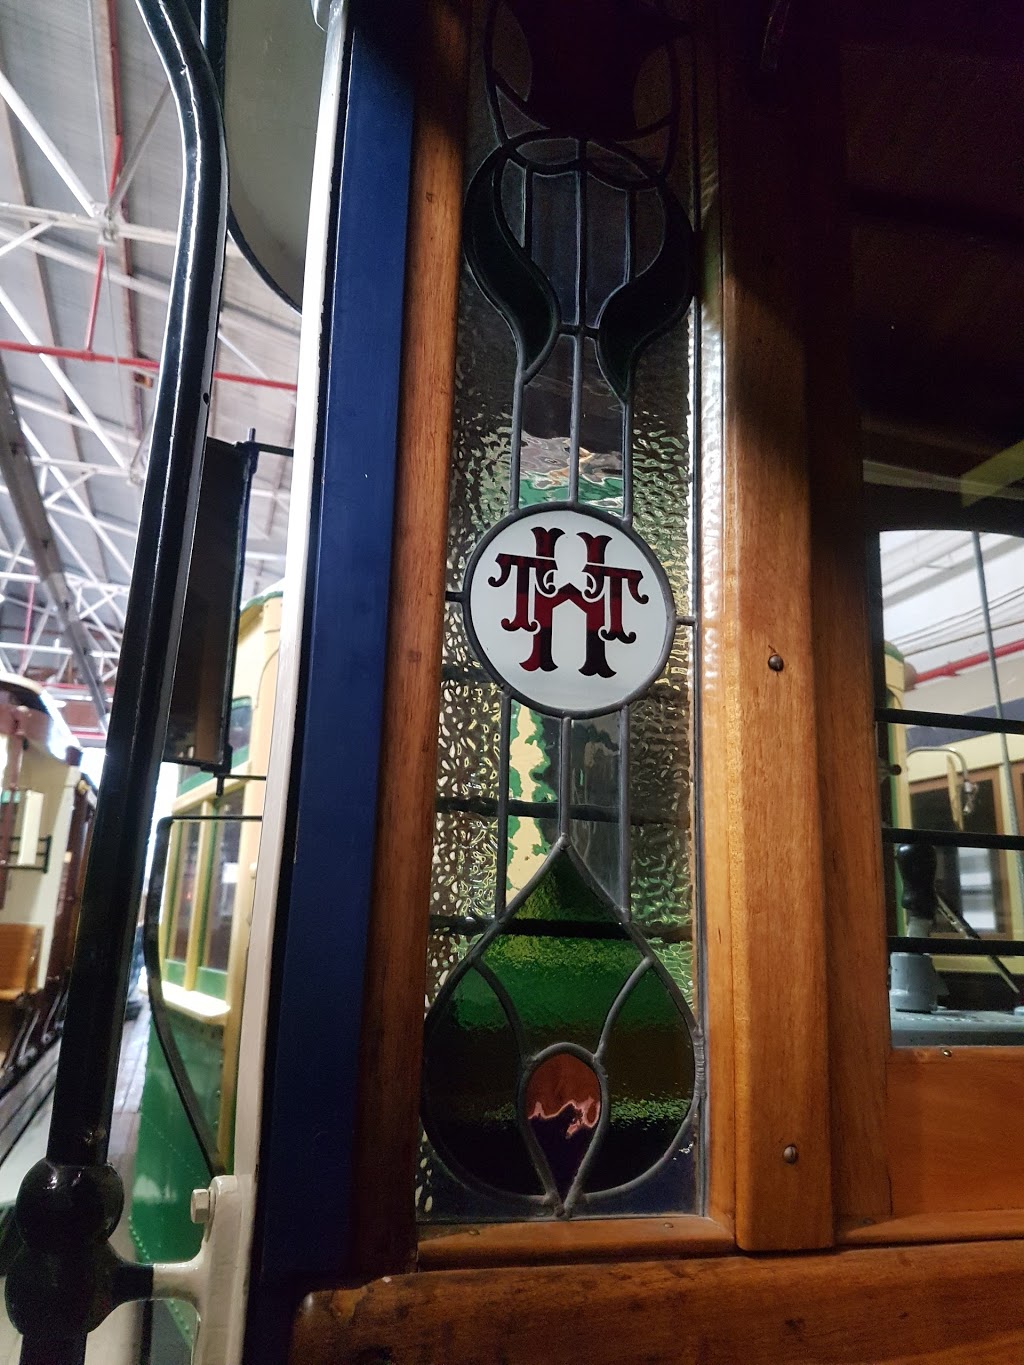 Melbourne Tram Museum | 8 Wallen Rd, Hawthorn VIC 3122, Australia | Phone: (03) 9819 6447